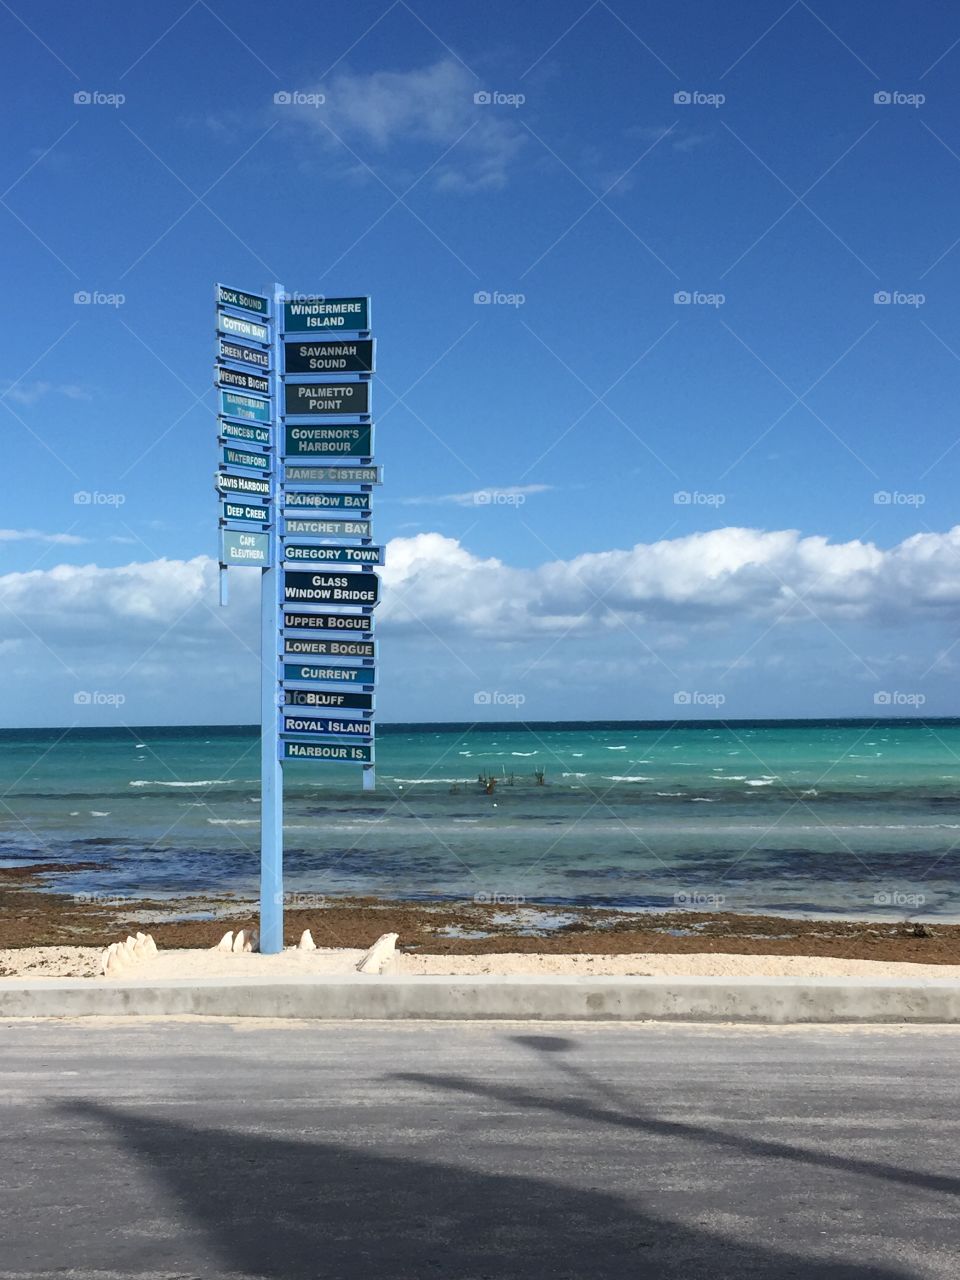 Road sign in Eleuthera, Bahamas.